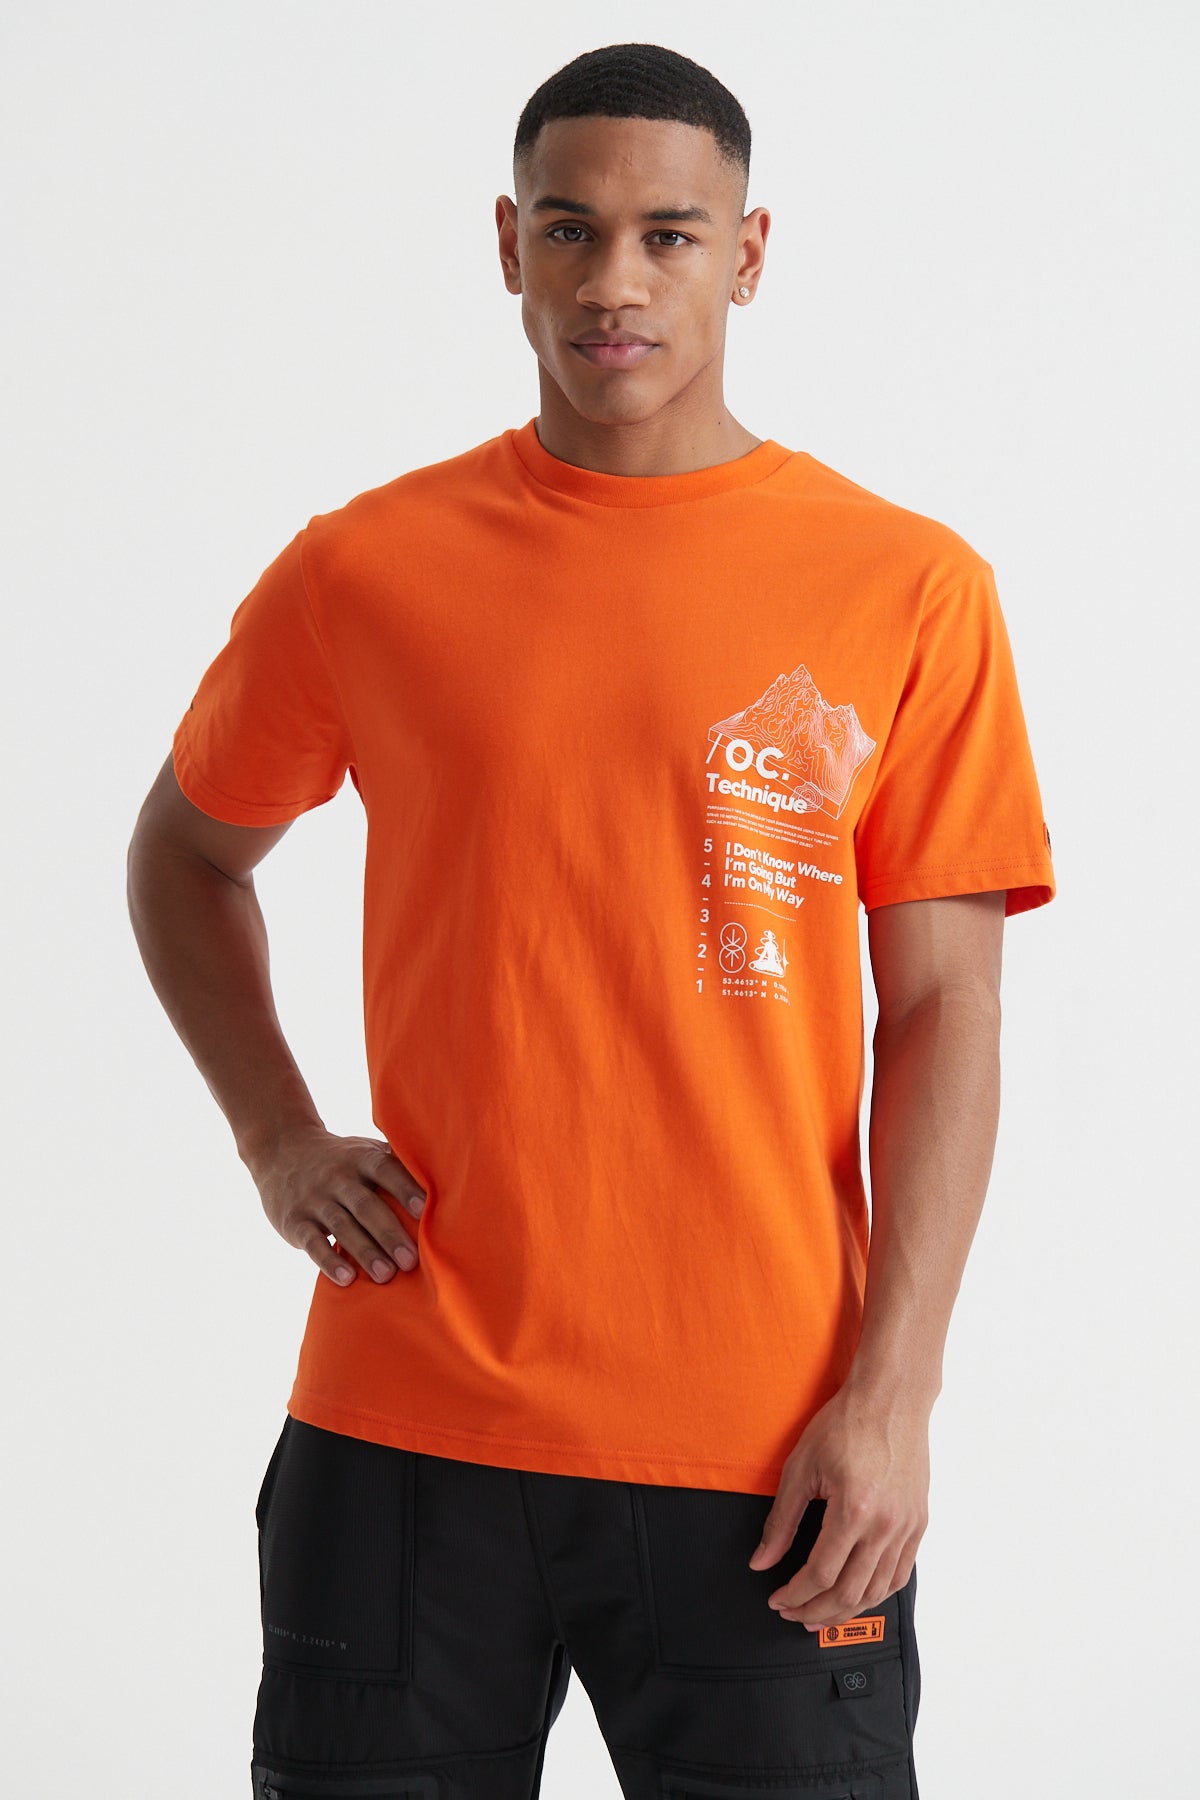 Topography T-shirt -  Burnt Orange